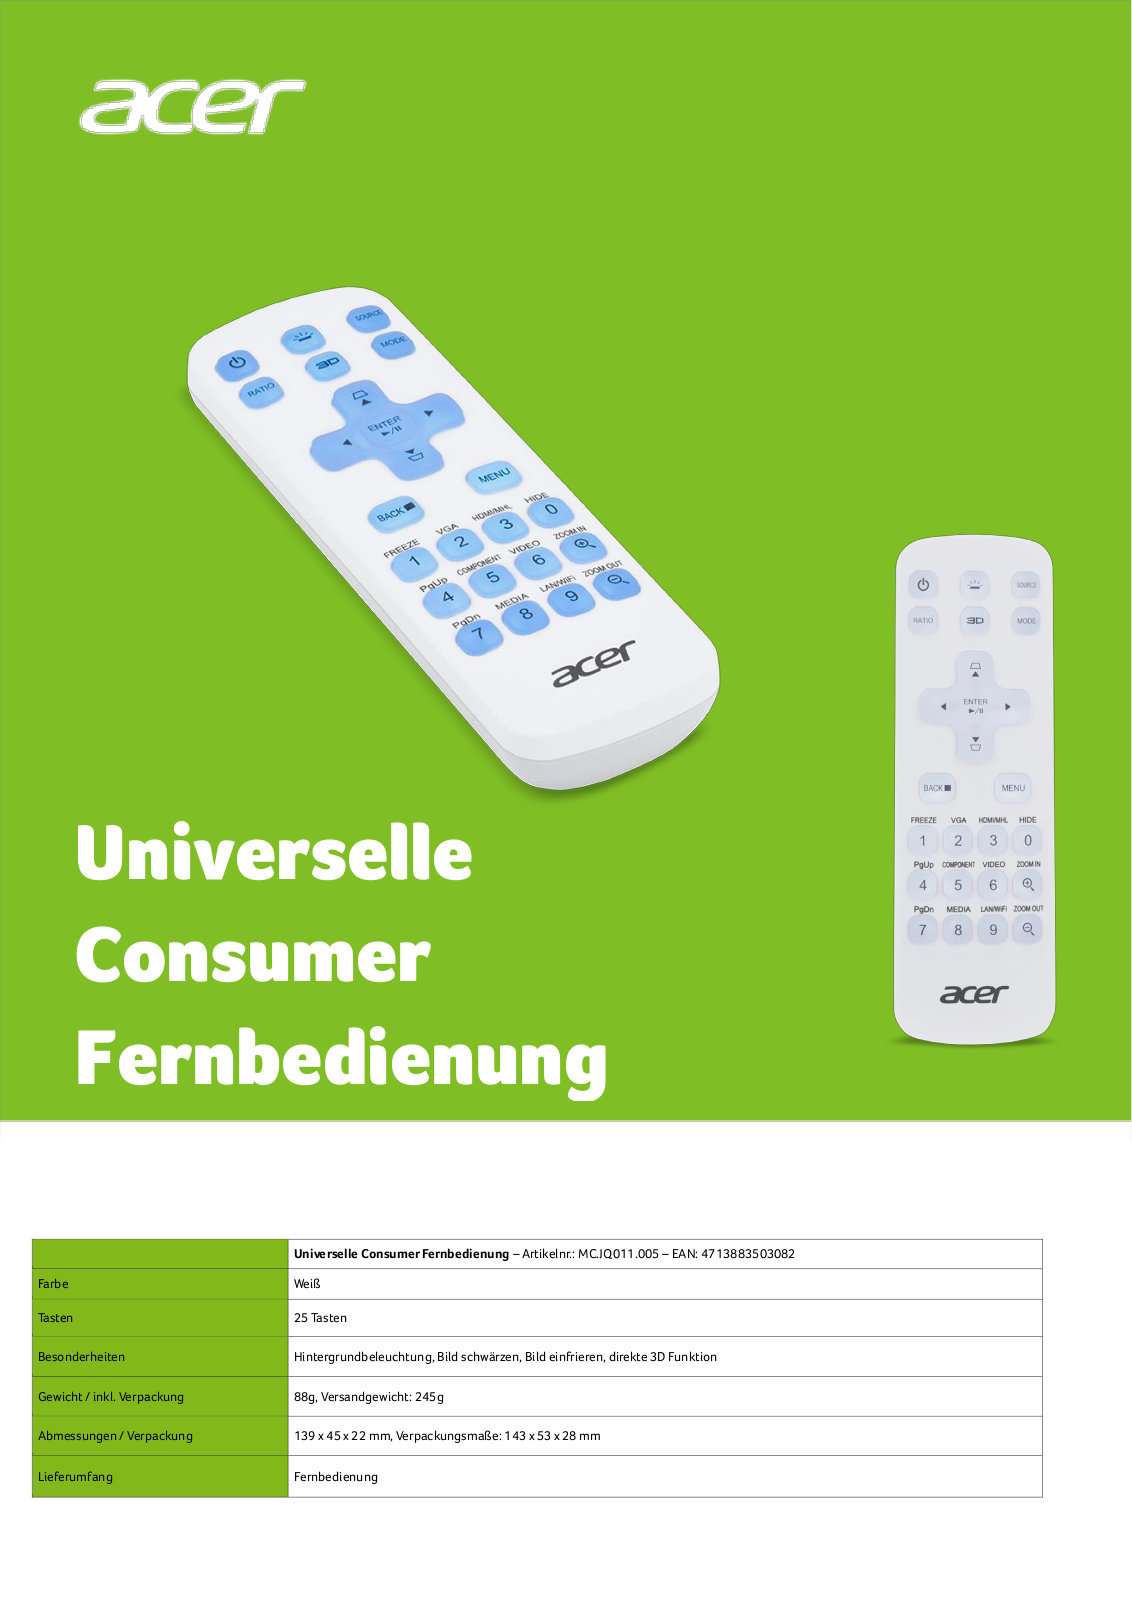 Acer Universelle Consumer Fernbedienung User Manual